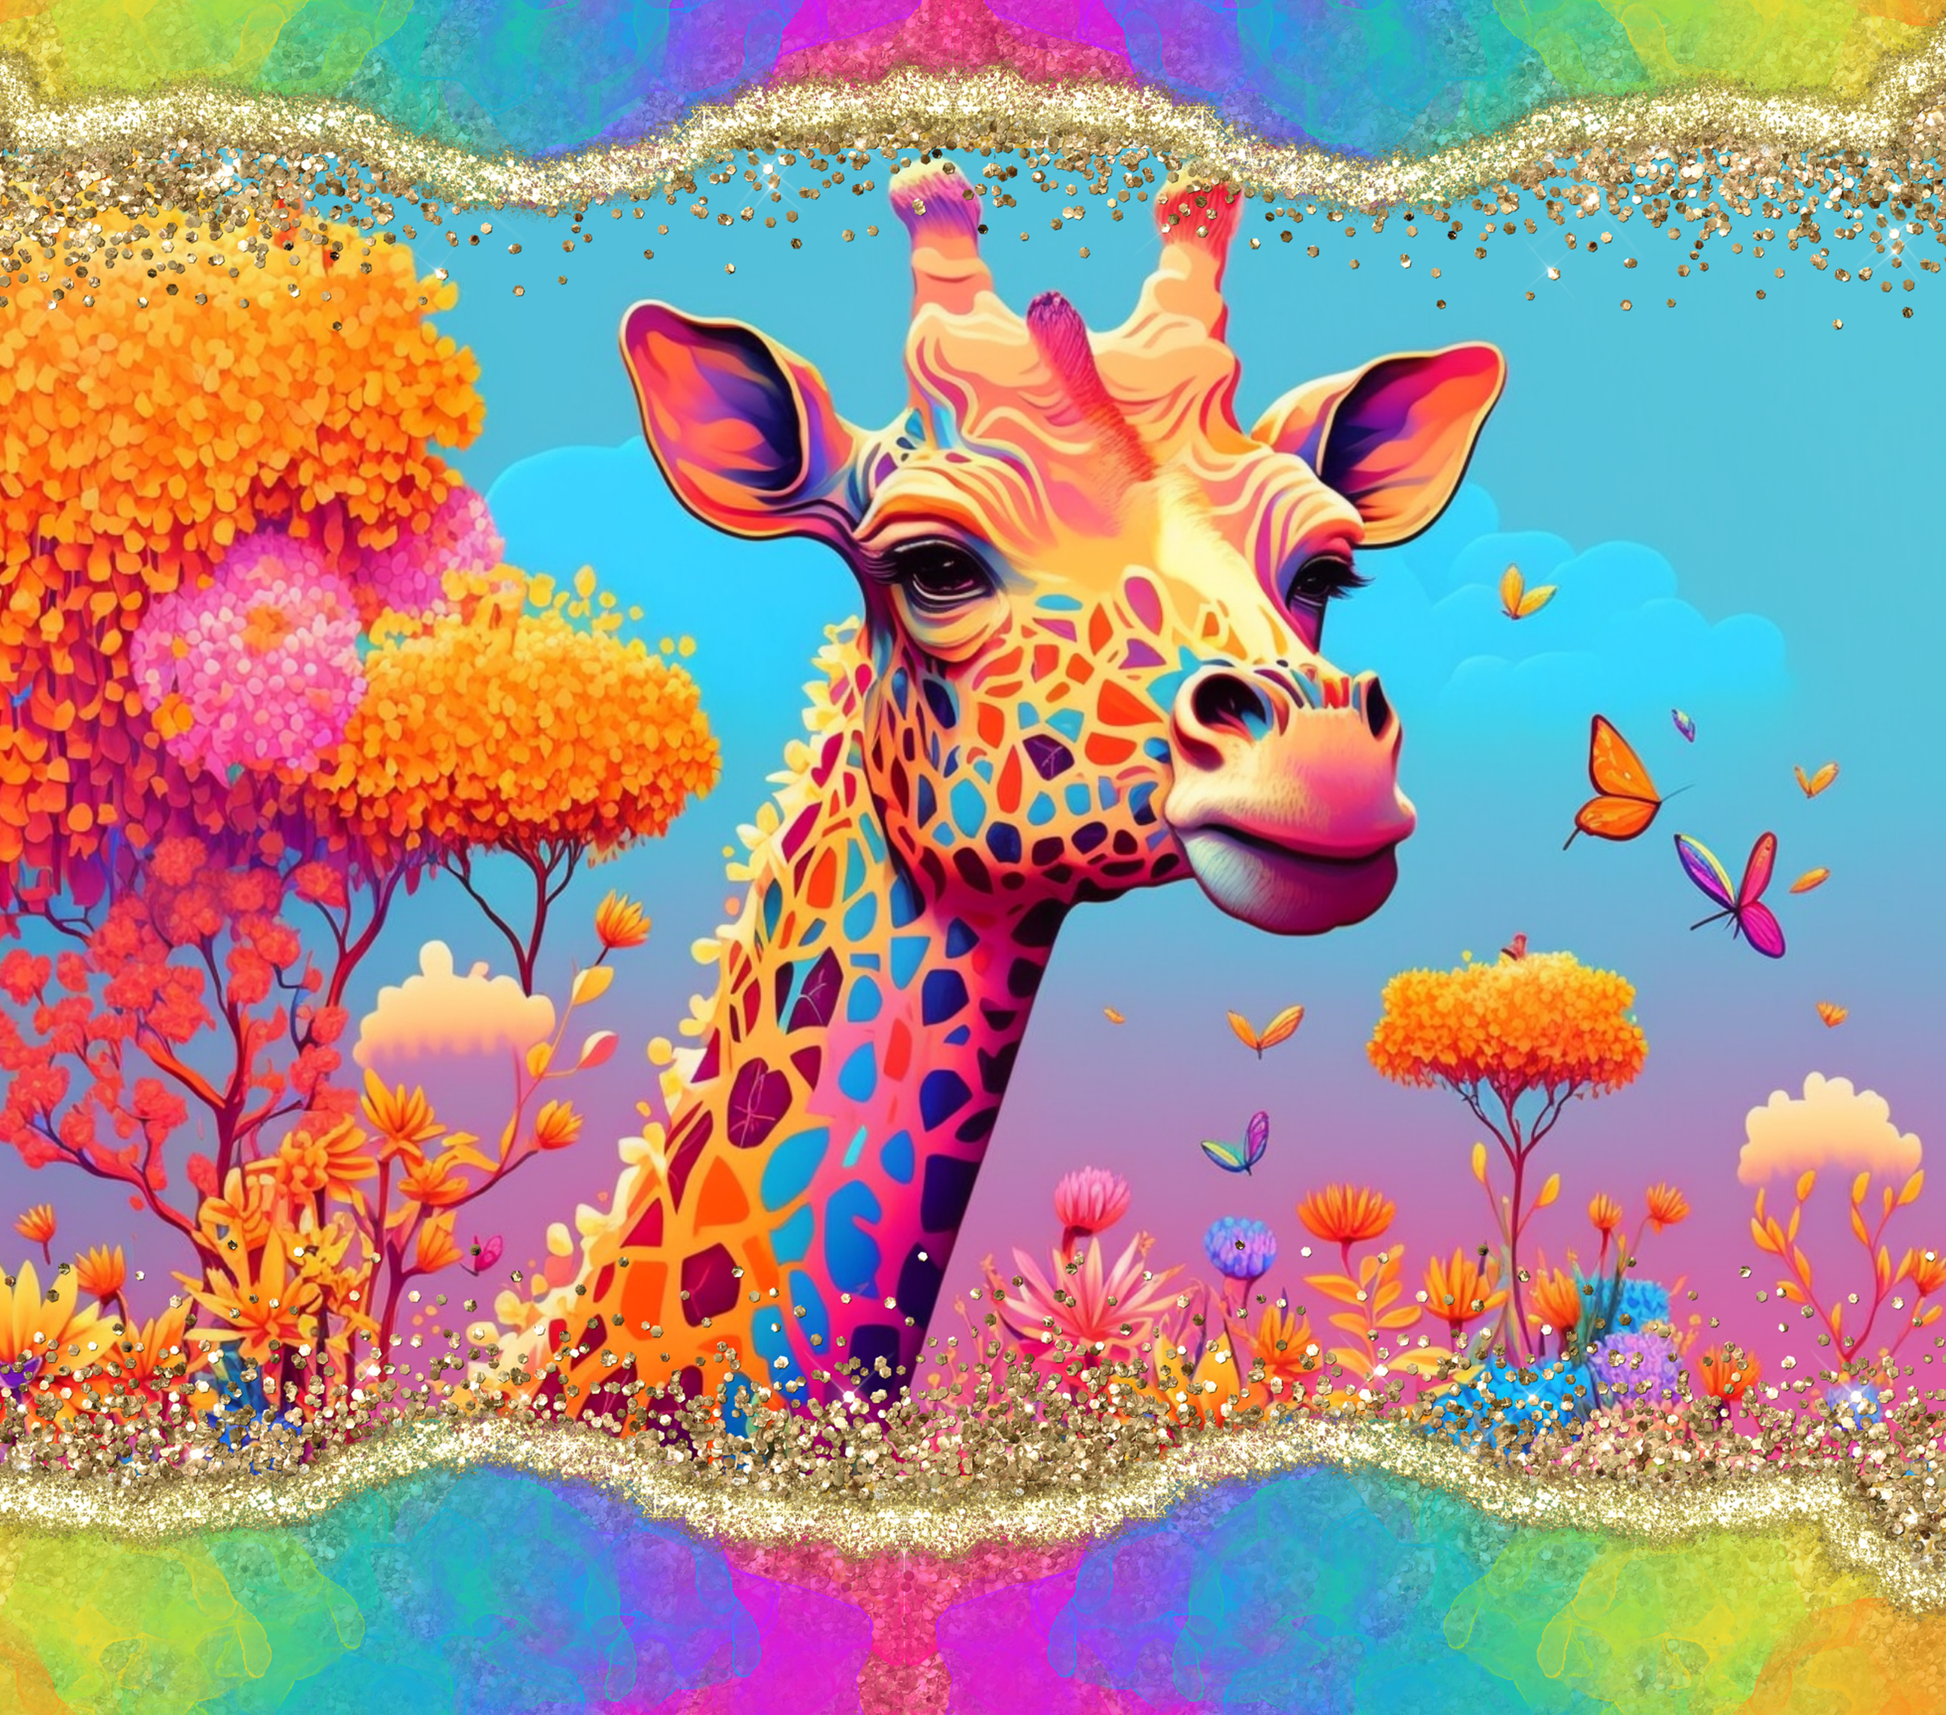 20 oz Giraffe tumbler – Hyper Designz Ink.